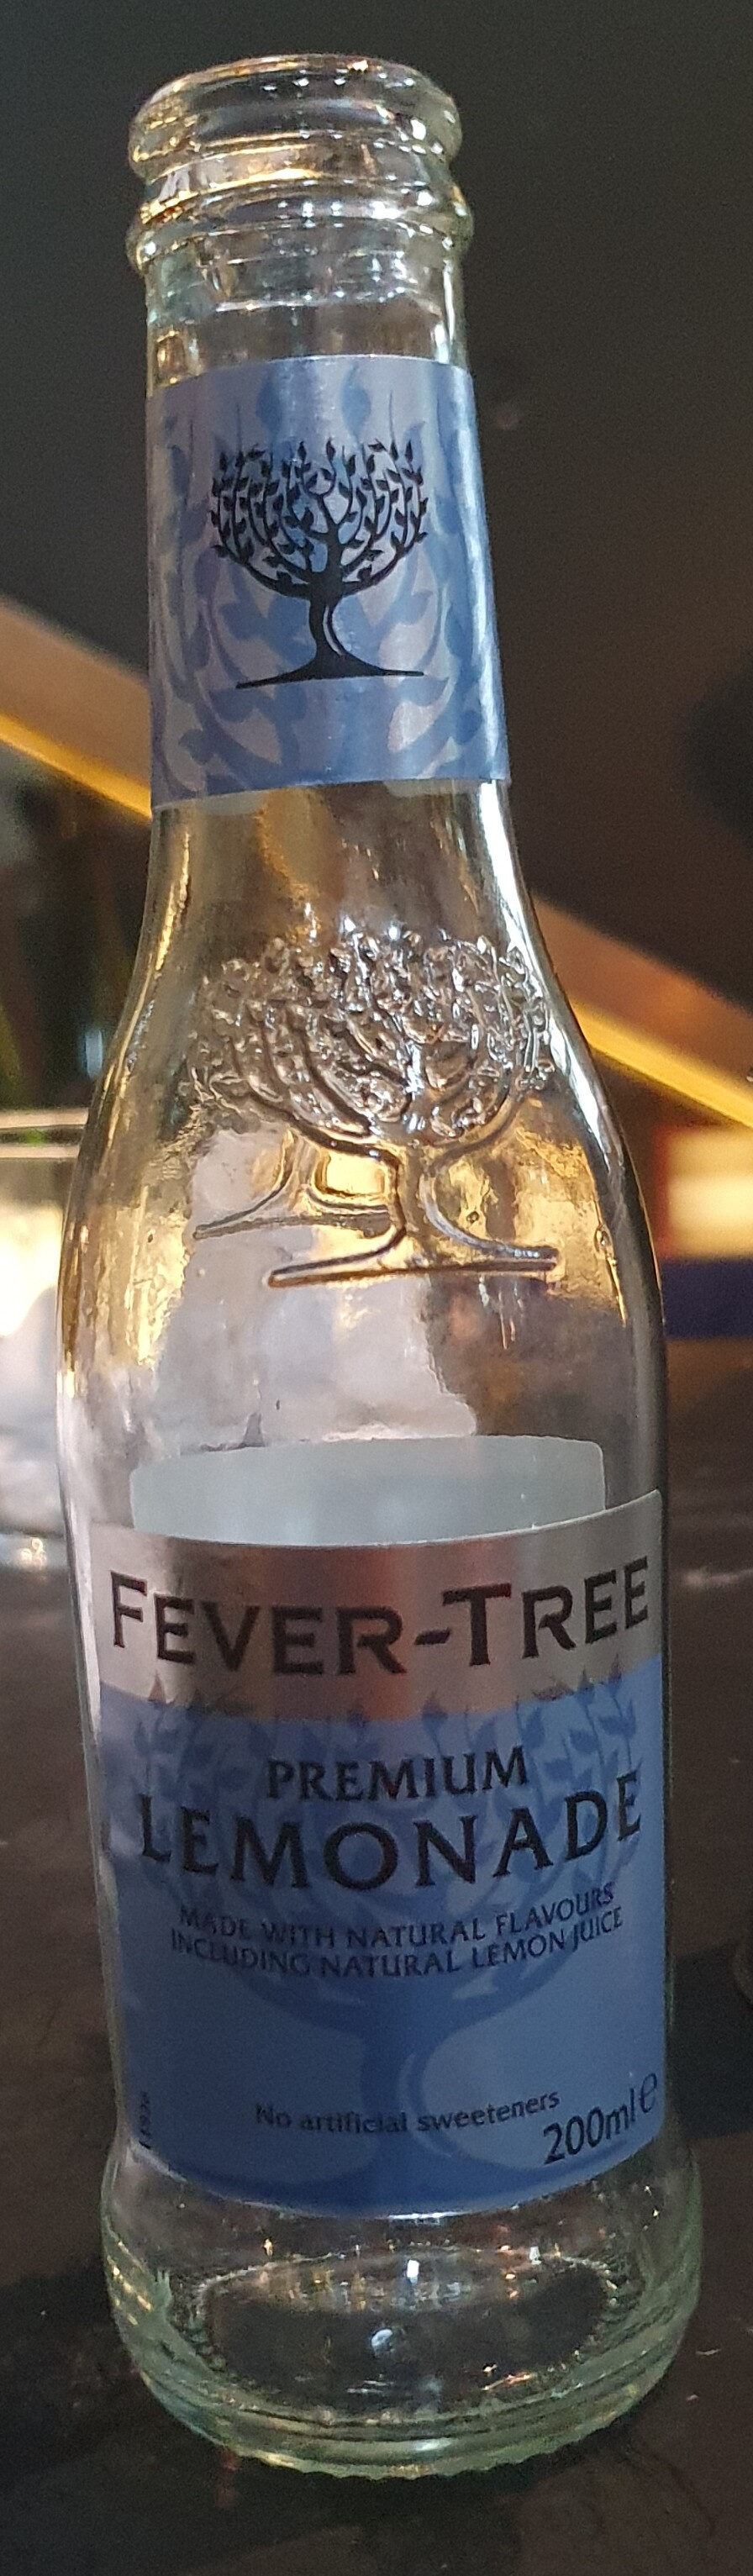 Fever-tree Premium Lemonade - Product